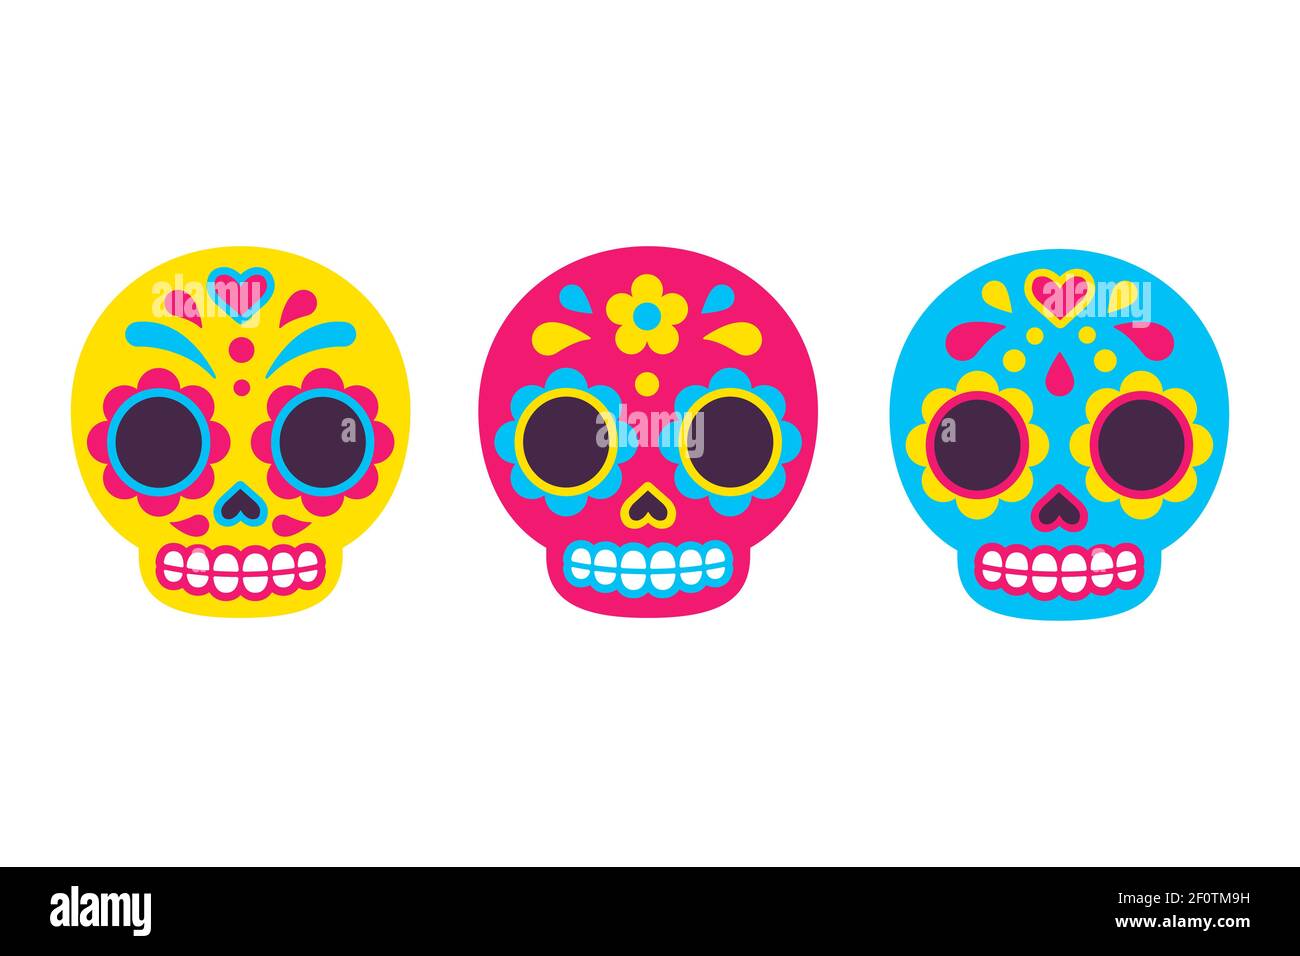 Mexican Dia de los Muertos (Day of the Dead) sugar skull icons. Cute cartoon illustration set in flat vector style. Stock Vector